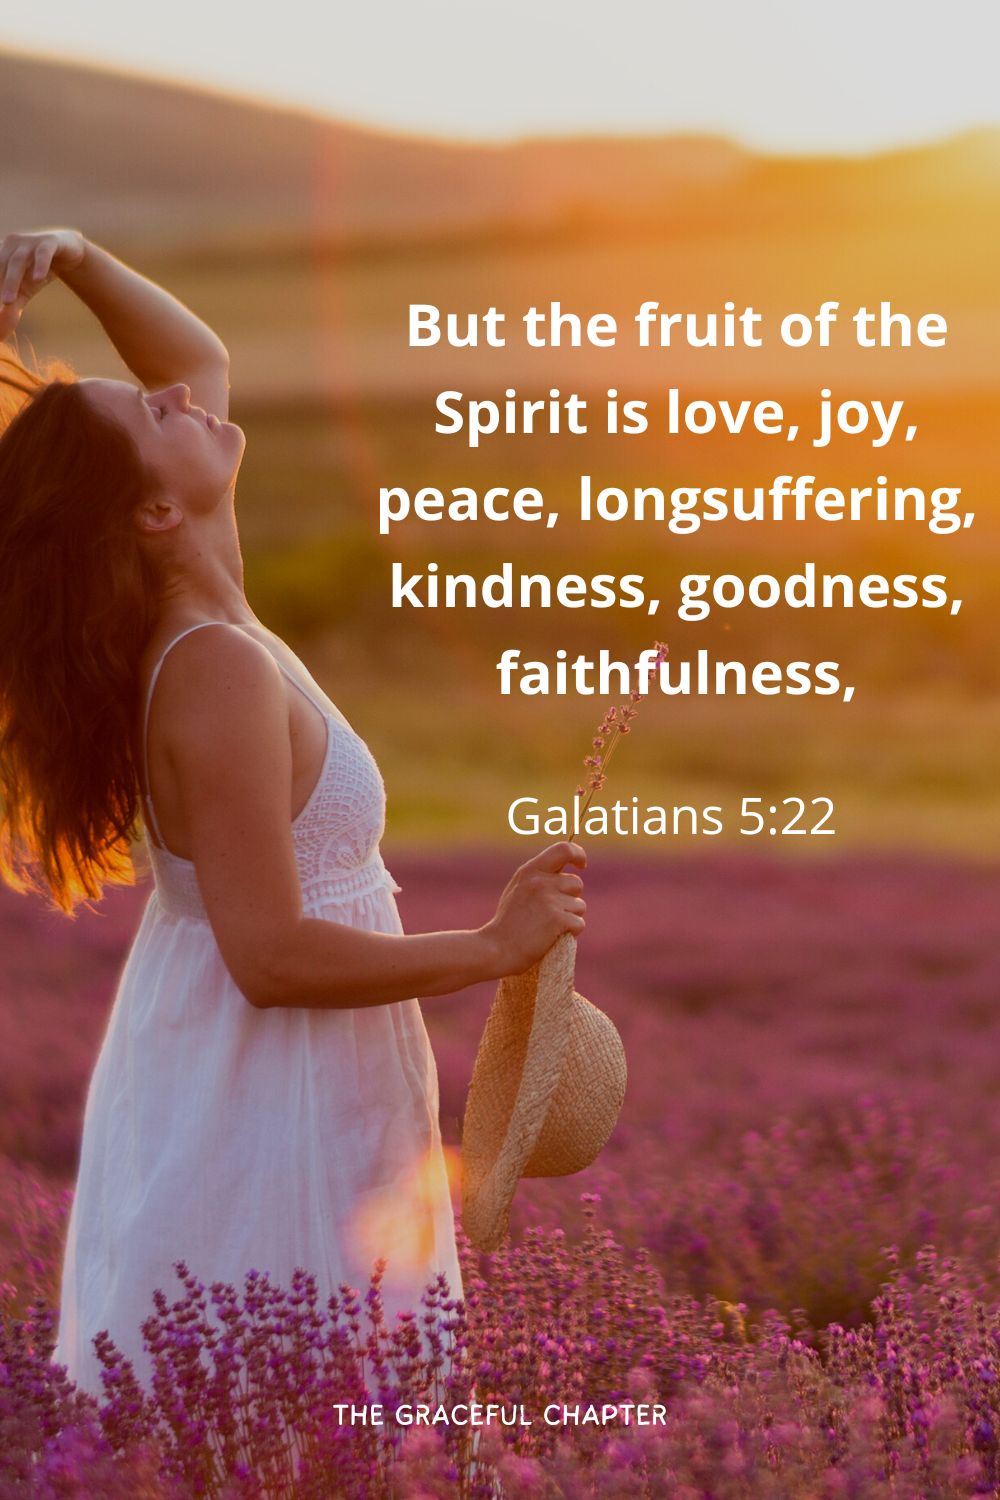  But the fruit of the Spirit is love, joy, peace, longsuffering, kindness, goodness, faithfulness,